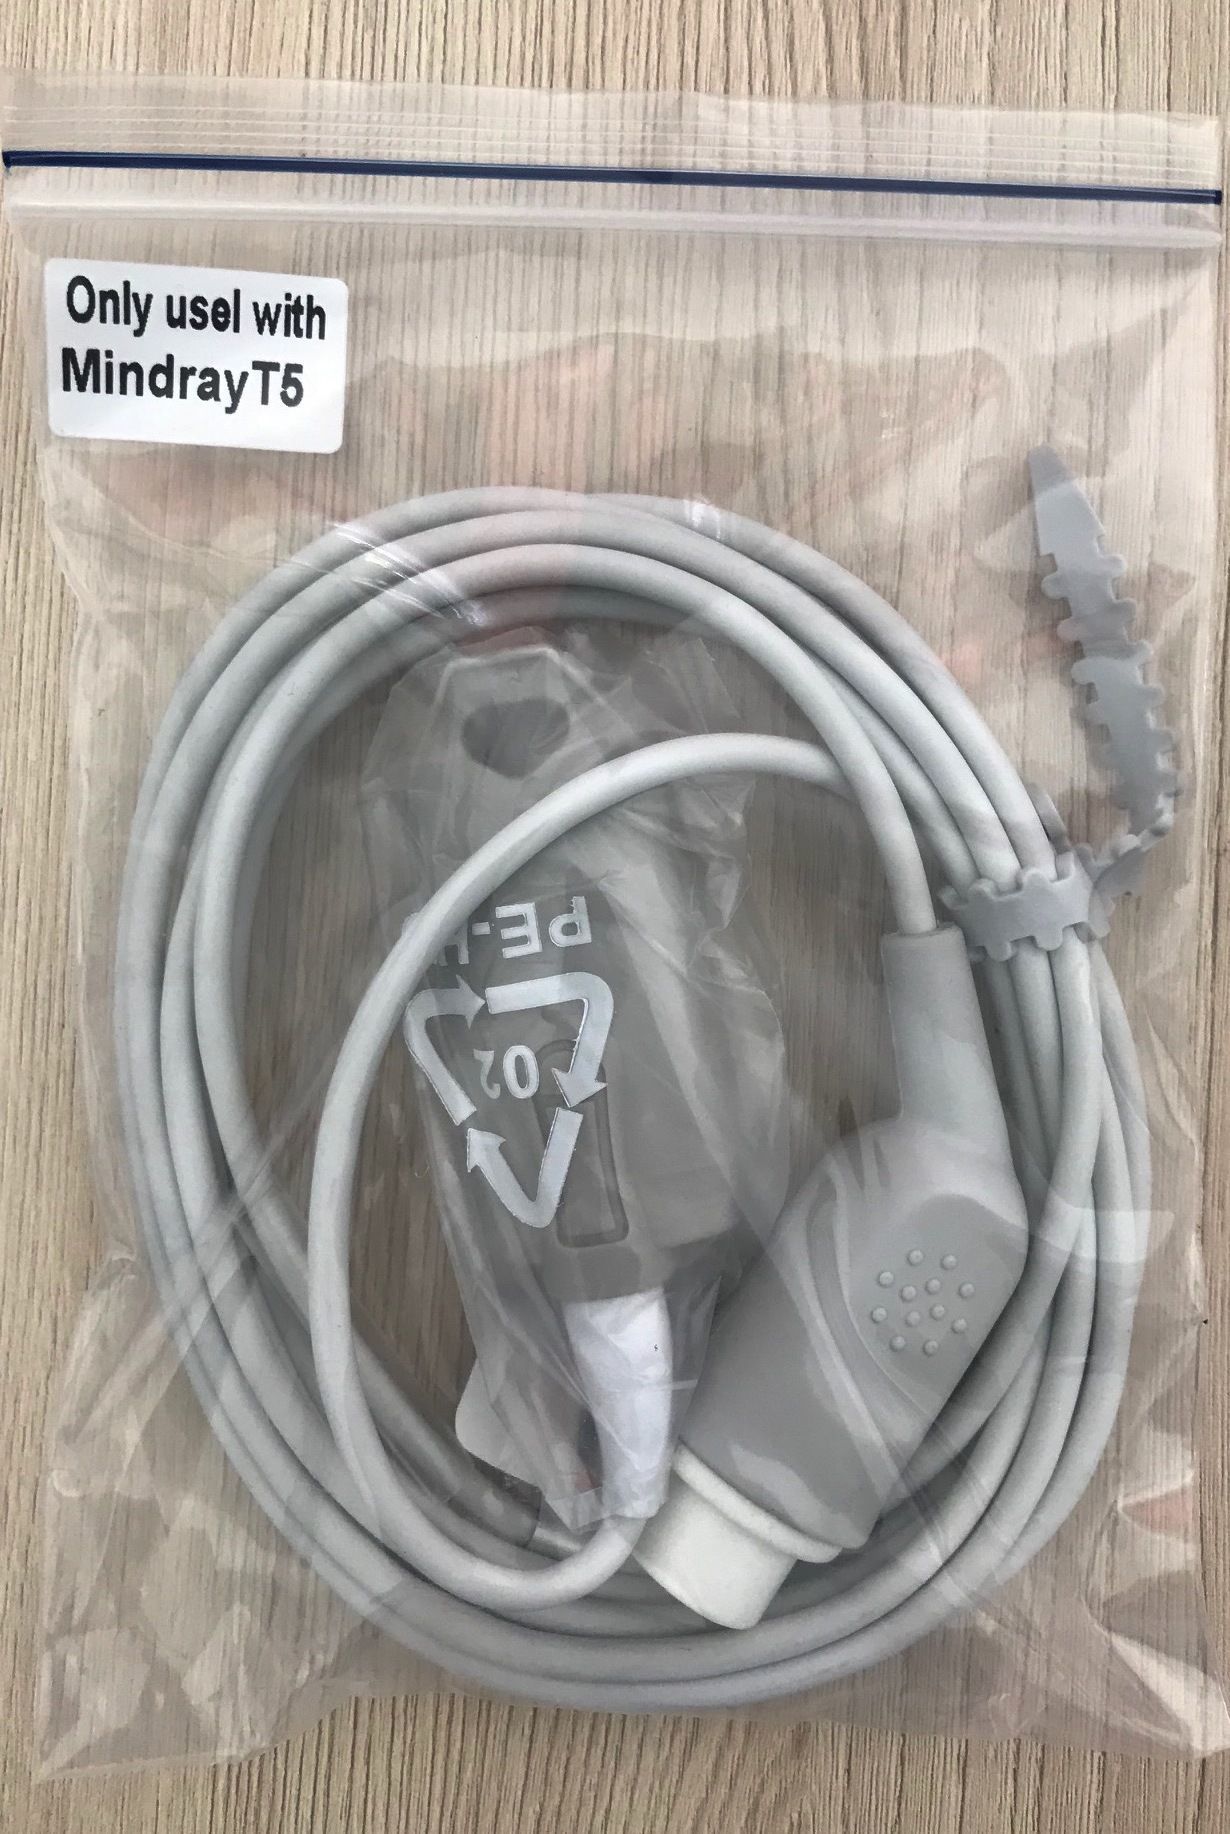 Spo2 Adult cable for Mindray imec series_สายแซทเคเบิ้ลผู้ใหญ่สำหรับเครื่องมอนิเตอร์ Mindray ตระกูล imec